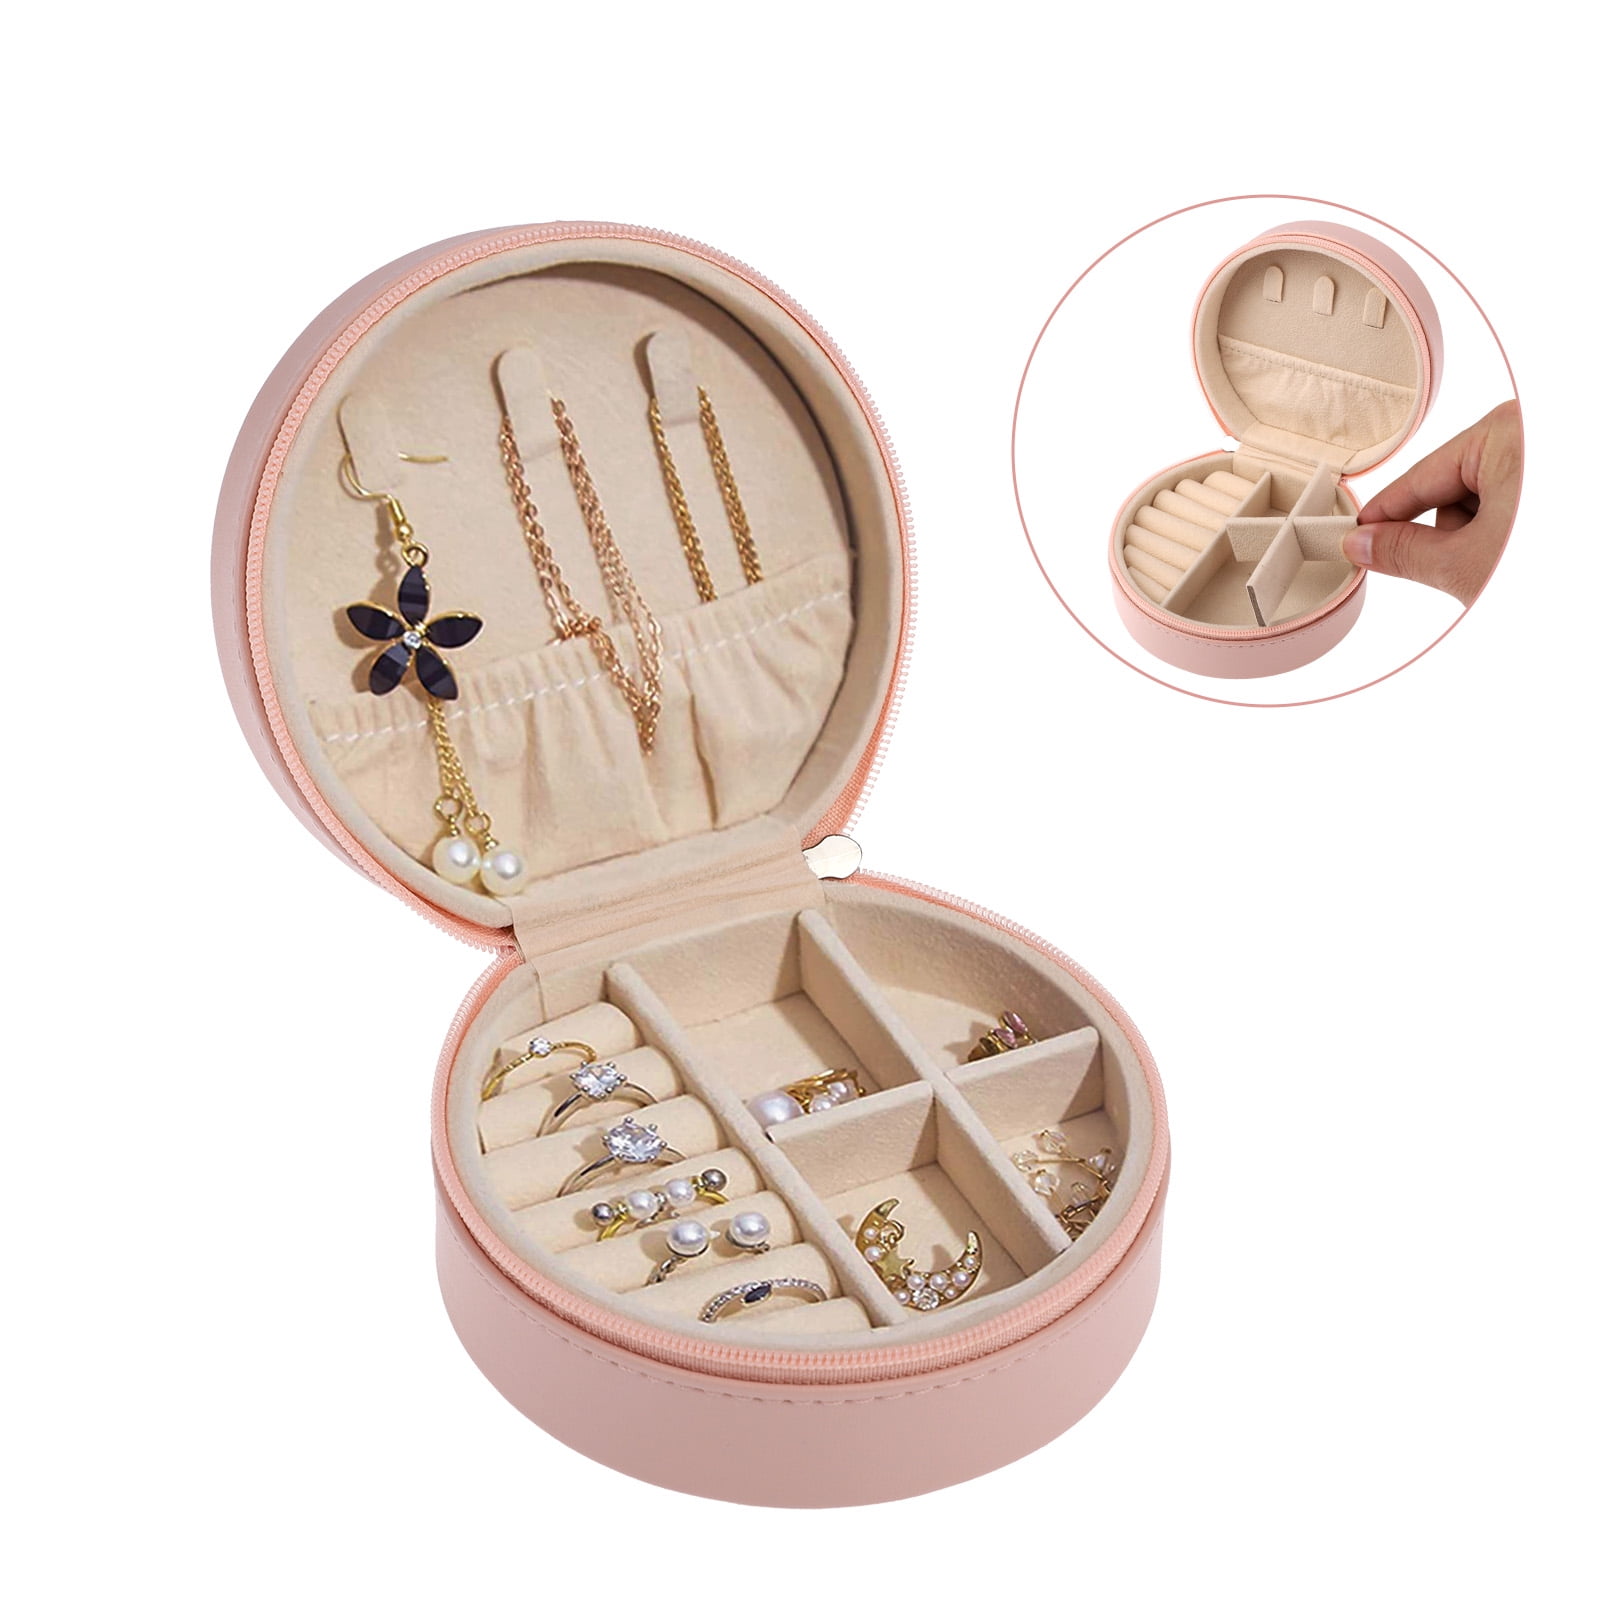 Jewelry Box, EEEkit Women Portable Travel Jewelry Organizer Box Makeup Cosmetic Case Storage Bag for Necklace Chain Bracelet Watch Earring Mirror